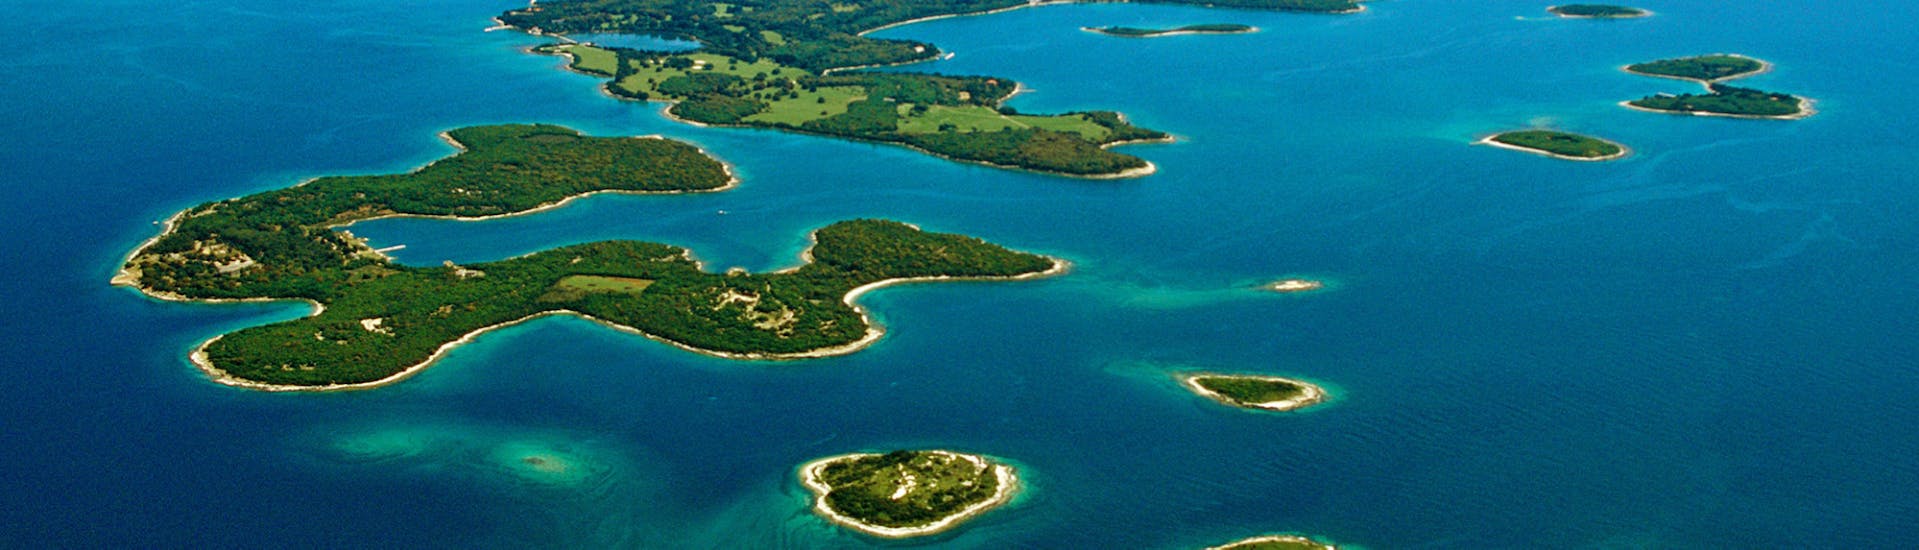 The Brijuni Islands that you visit during the Panorama Boat trip to Brijuni National Park.